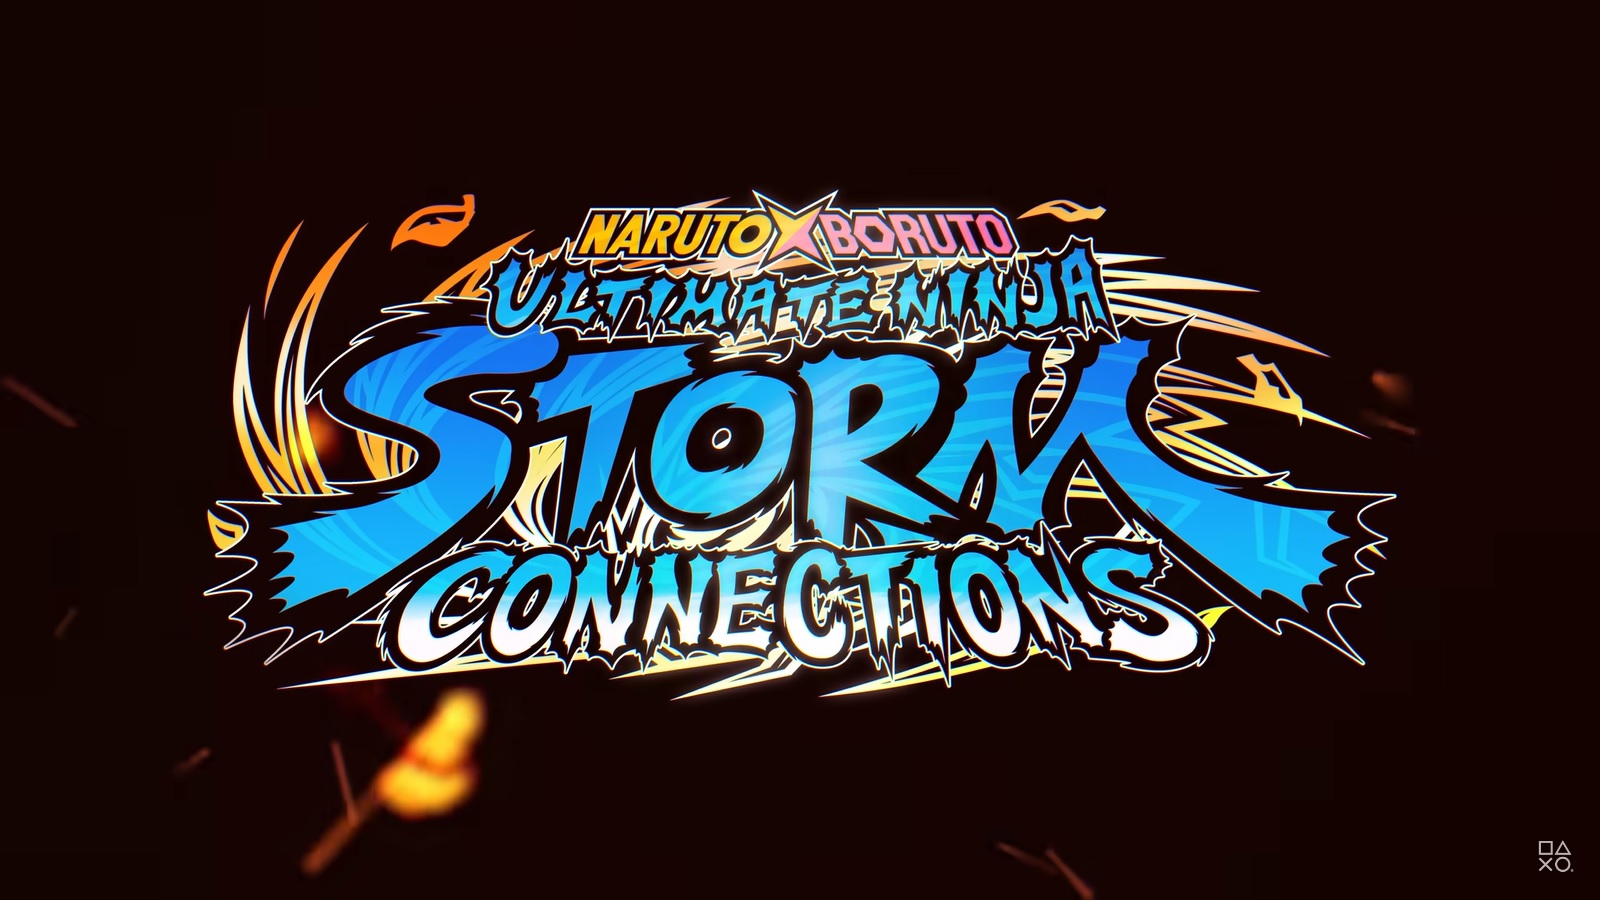 Connections Ninja Storm Ultimate X Boruto Naruto Smartprix analysis trailer -